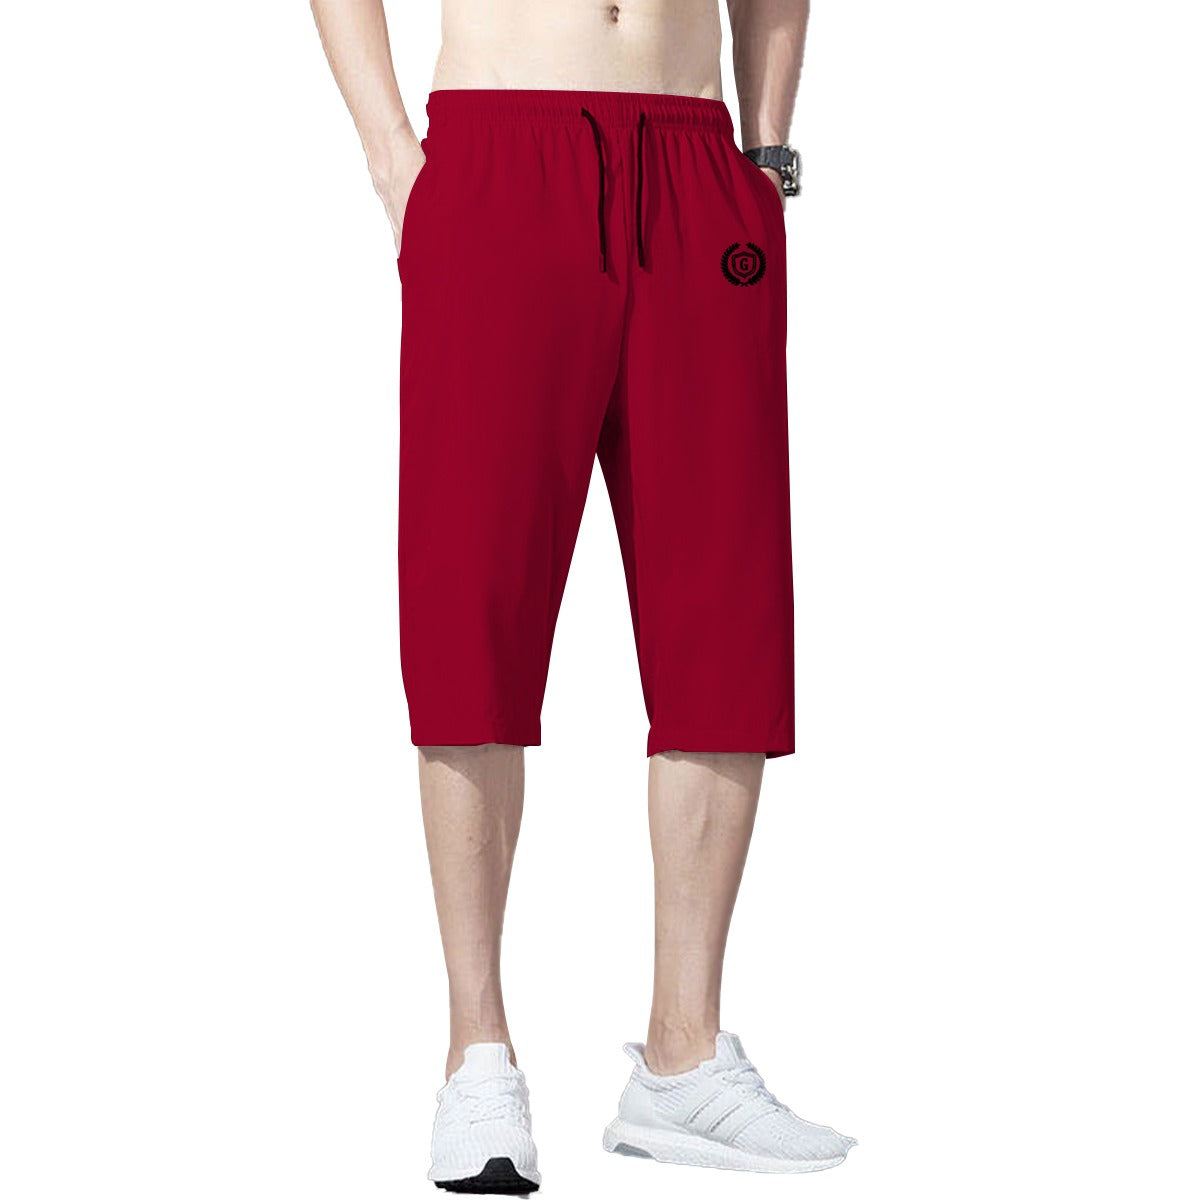 HG Signature Emb Three Quarter Summer Shorts - Blood Red